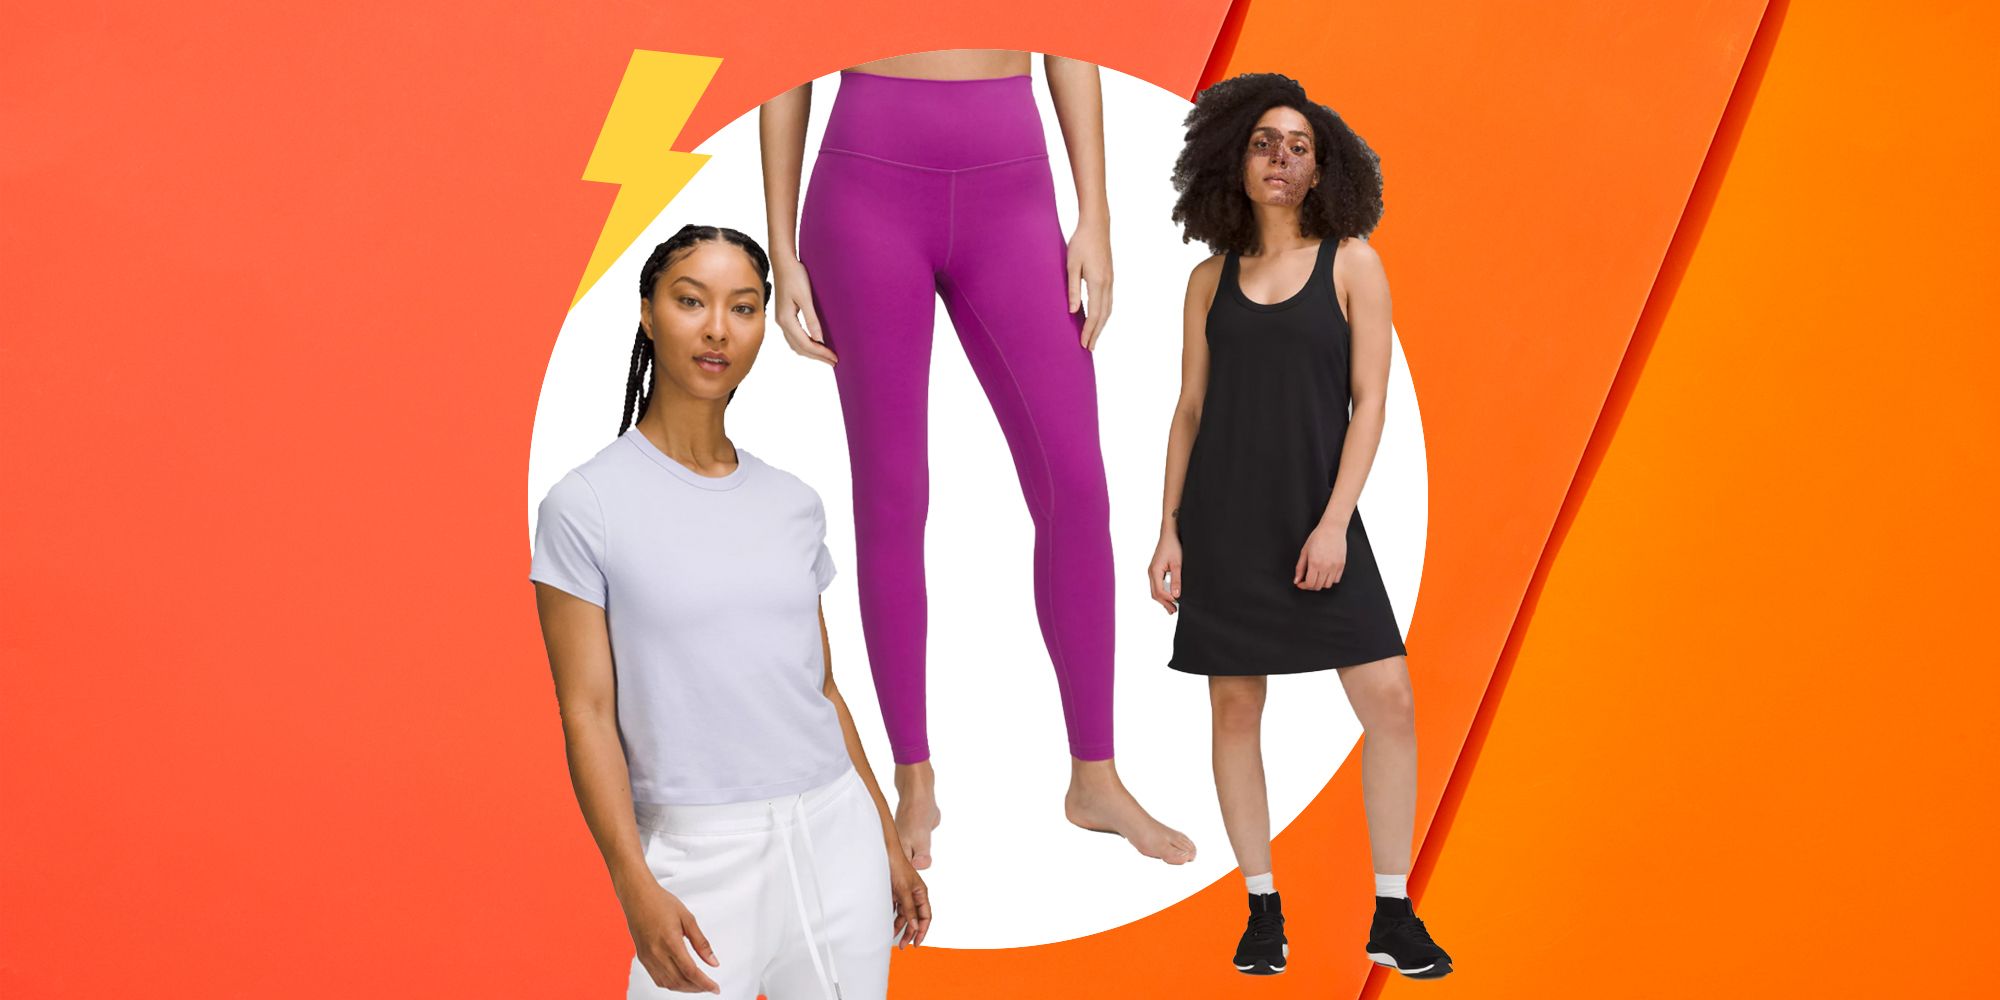 Lululemon Align Leggings Pink Size 6 - $45 (54% Off Retail) - From